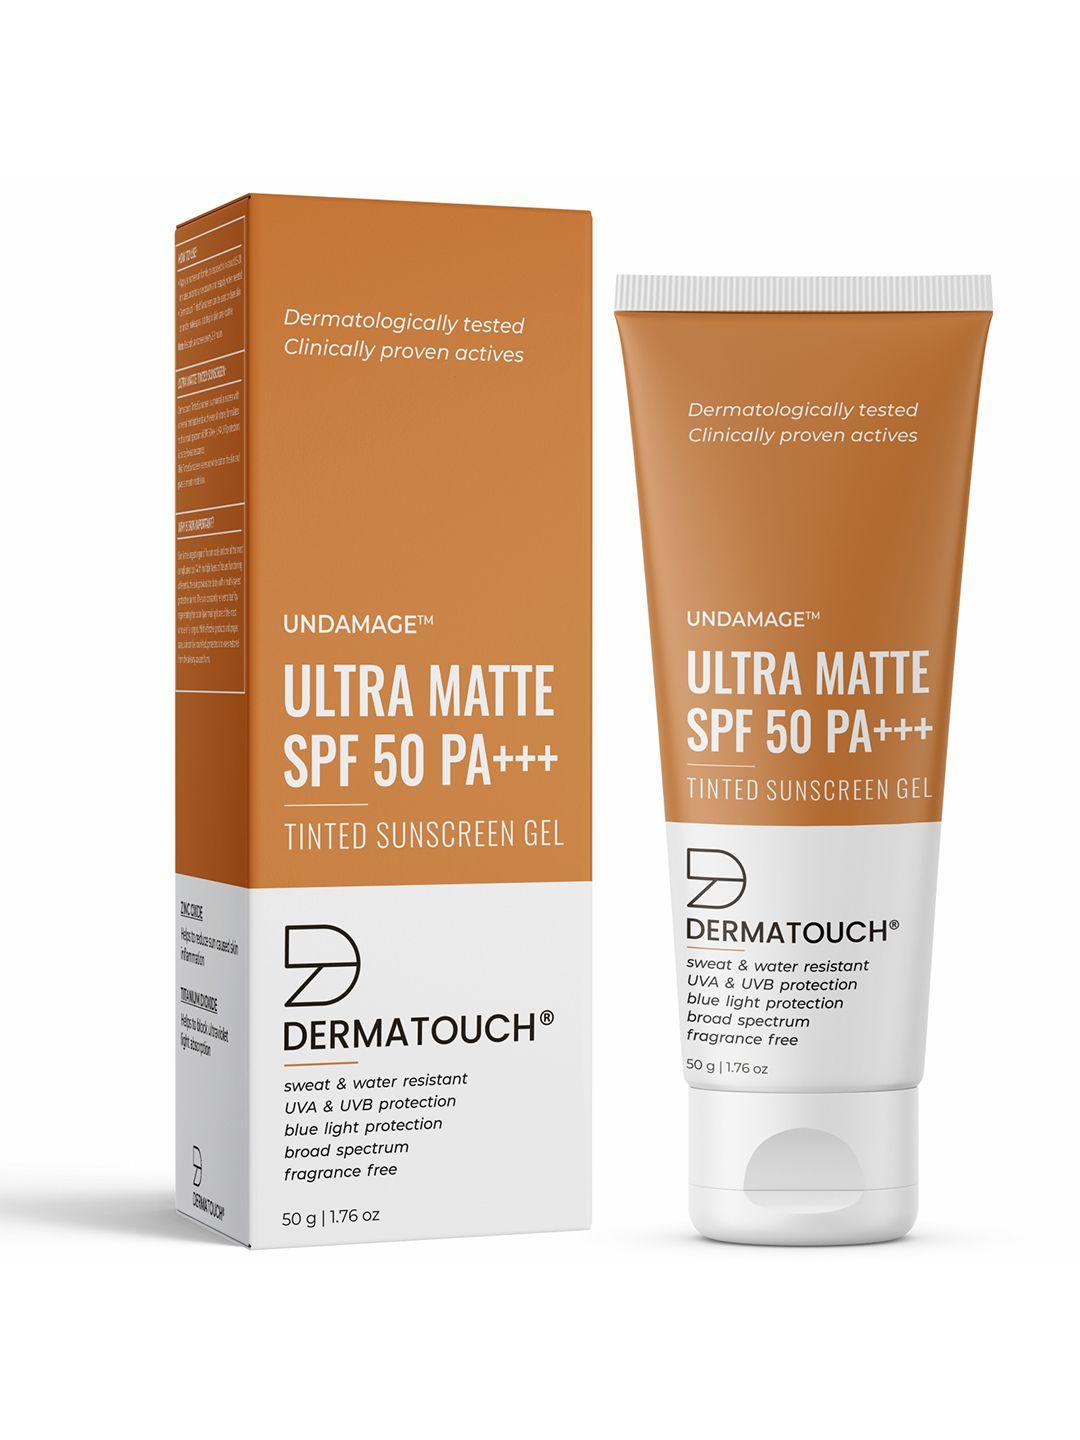 dermatouch-undamage-water-&-sweat-resistant-ultra-matte-tinted-sunscreen-spf-50-pa+++